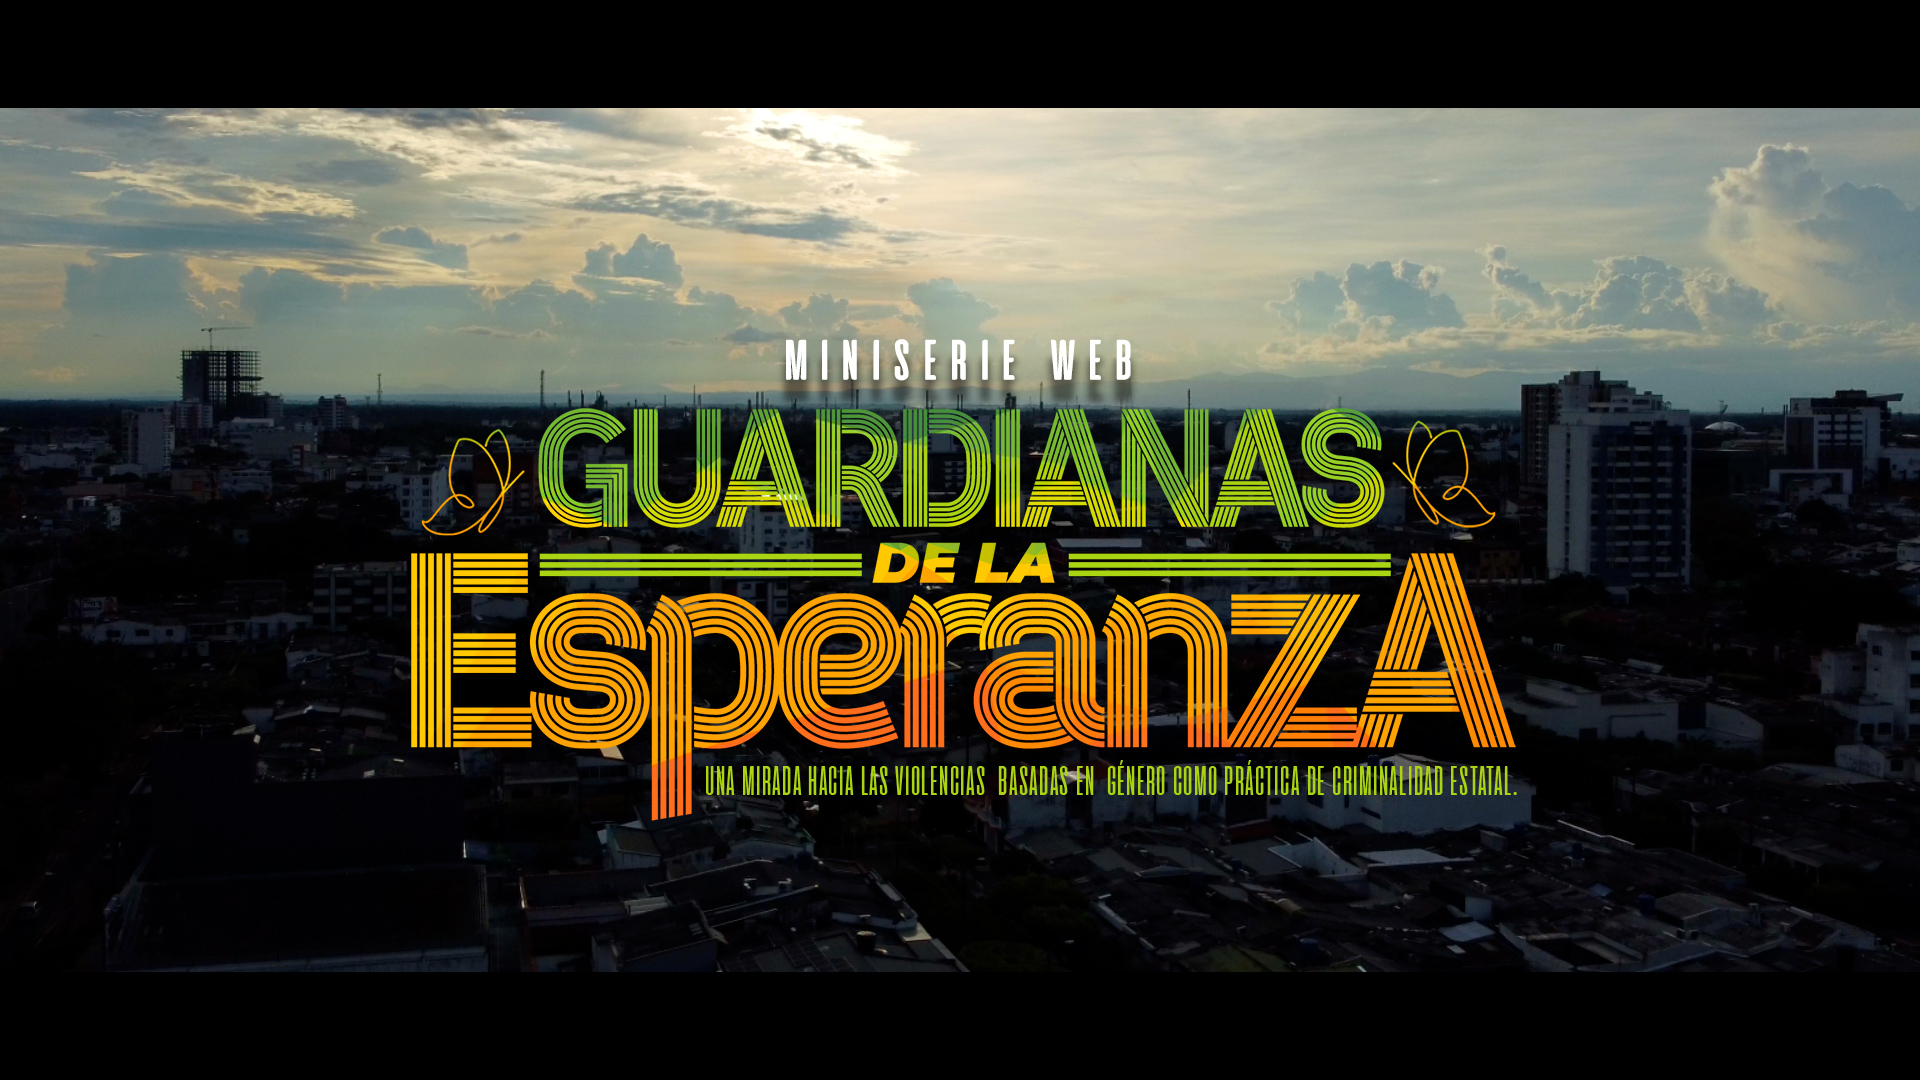 Miniserie, Guardianas de la esperanza (Trailer).